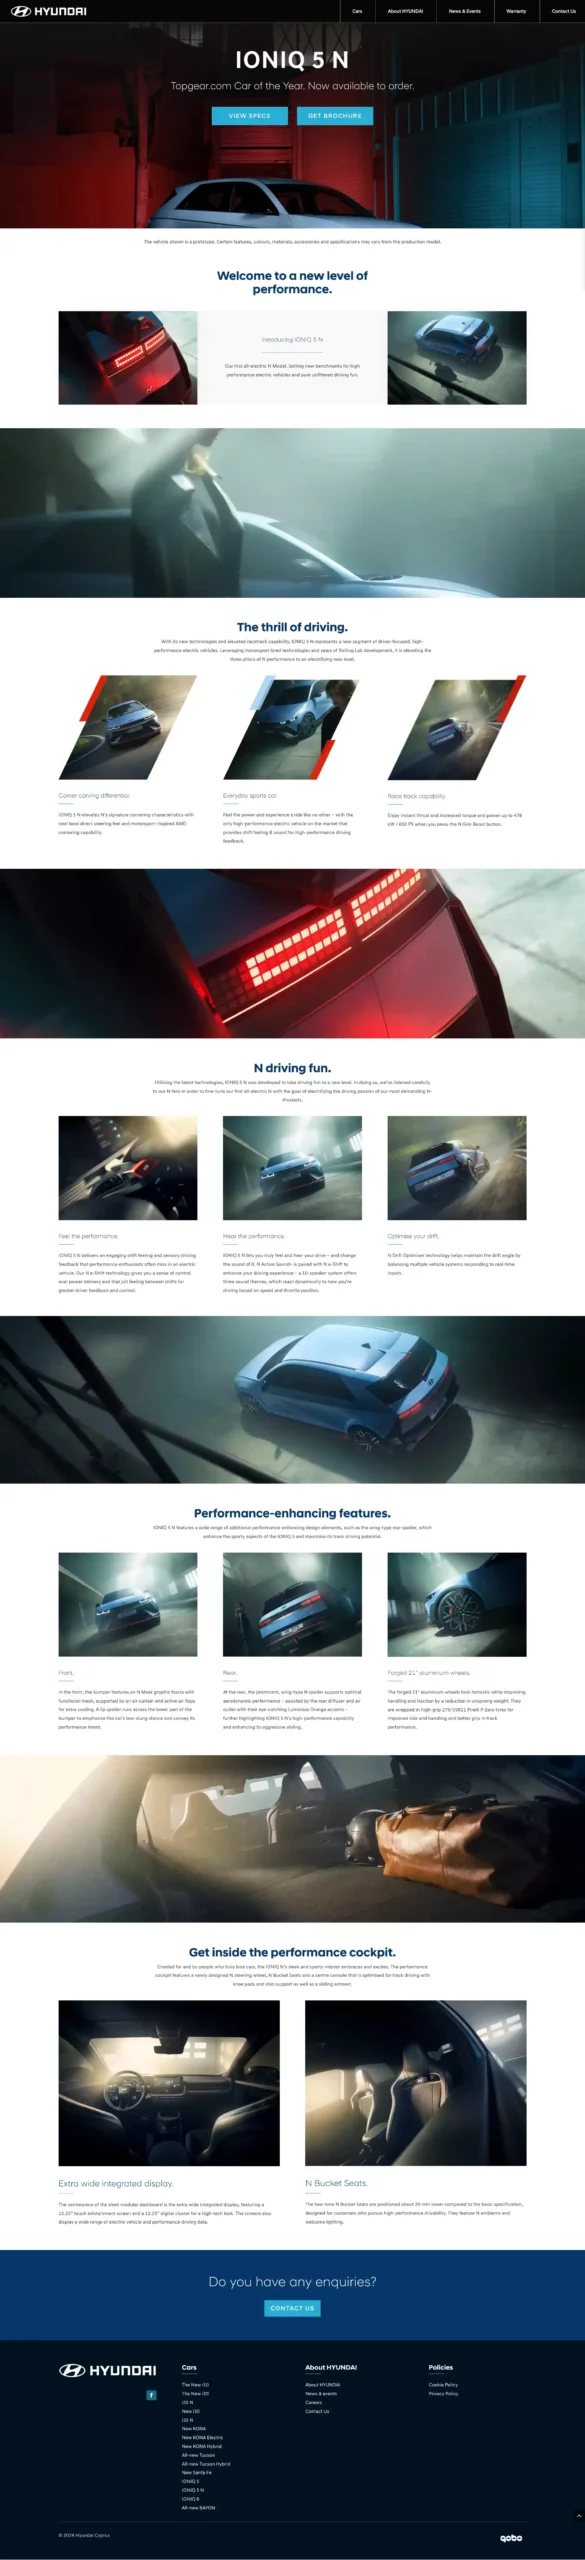 Hyundai Cyprus Website Redesign with visual aesthetics and CTAs